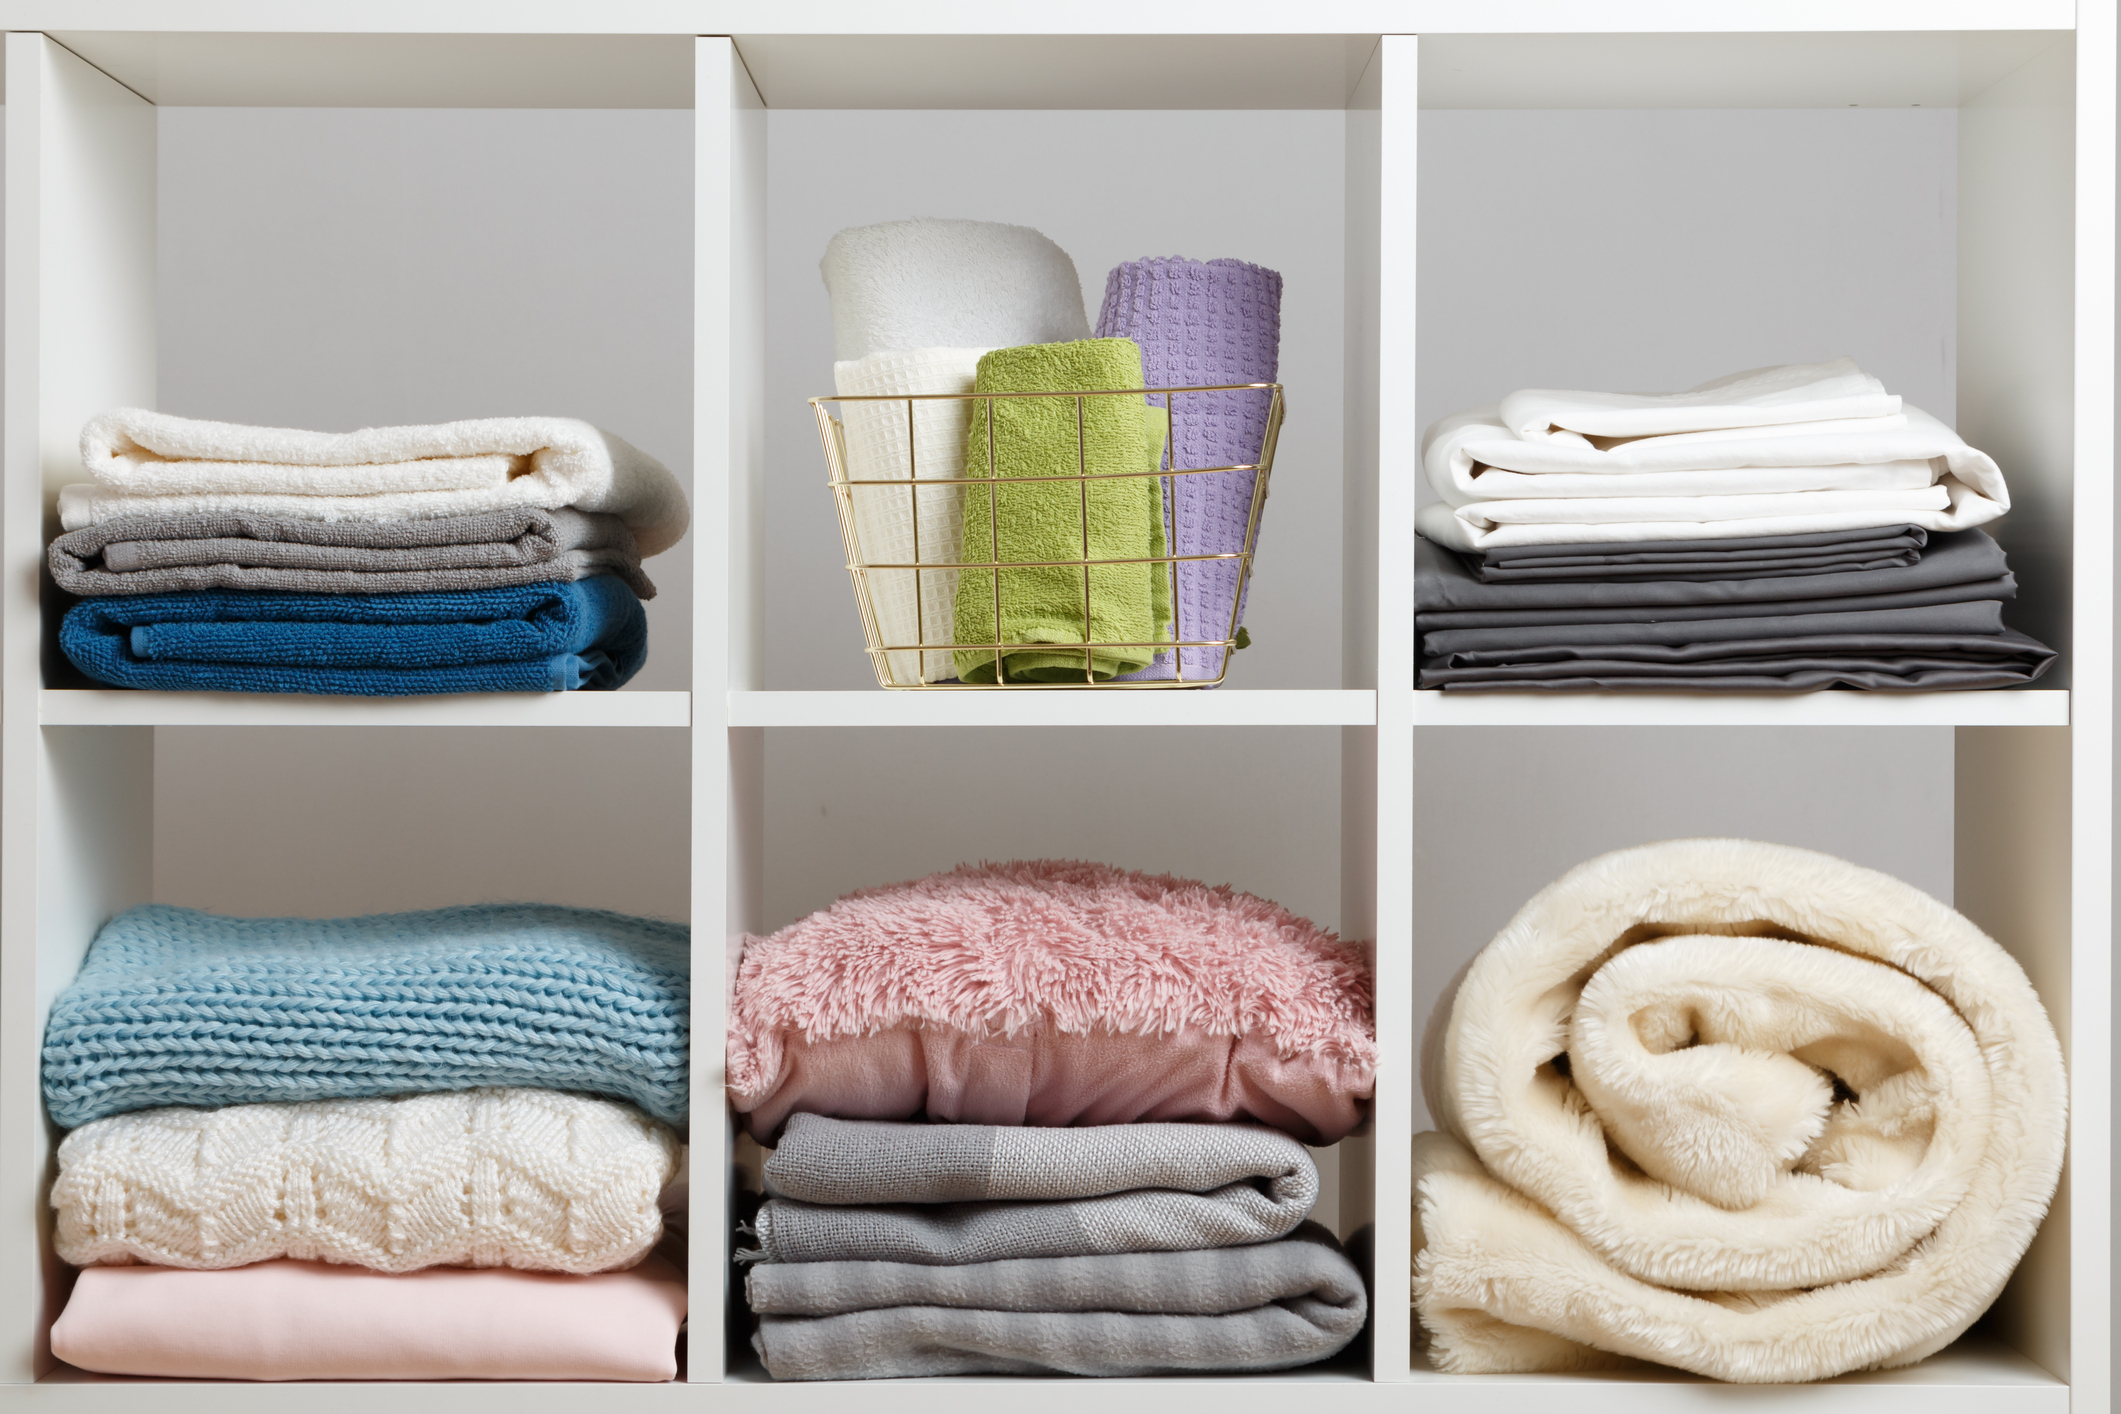 Organizing Linen Closet, Adjustable Shelving